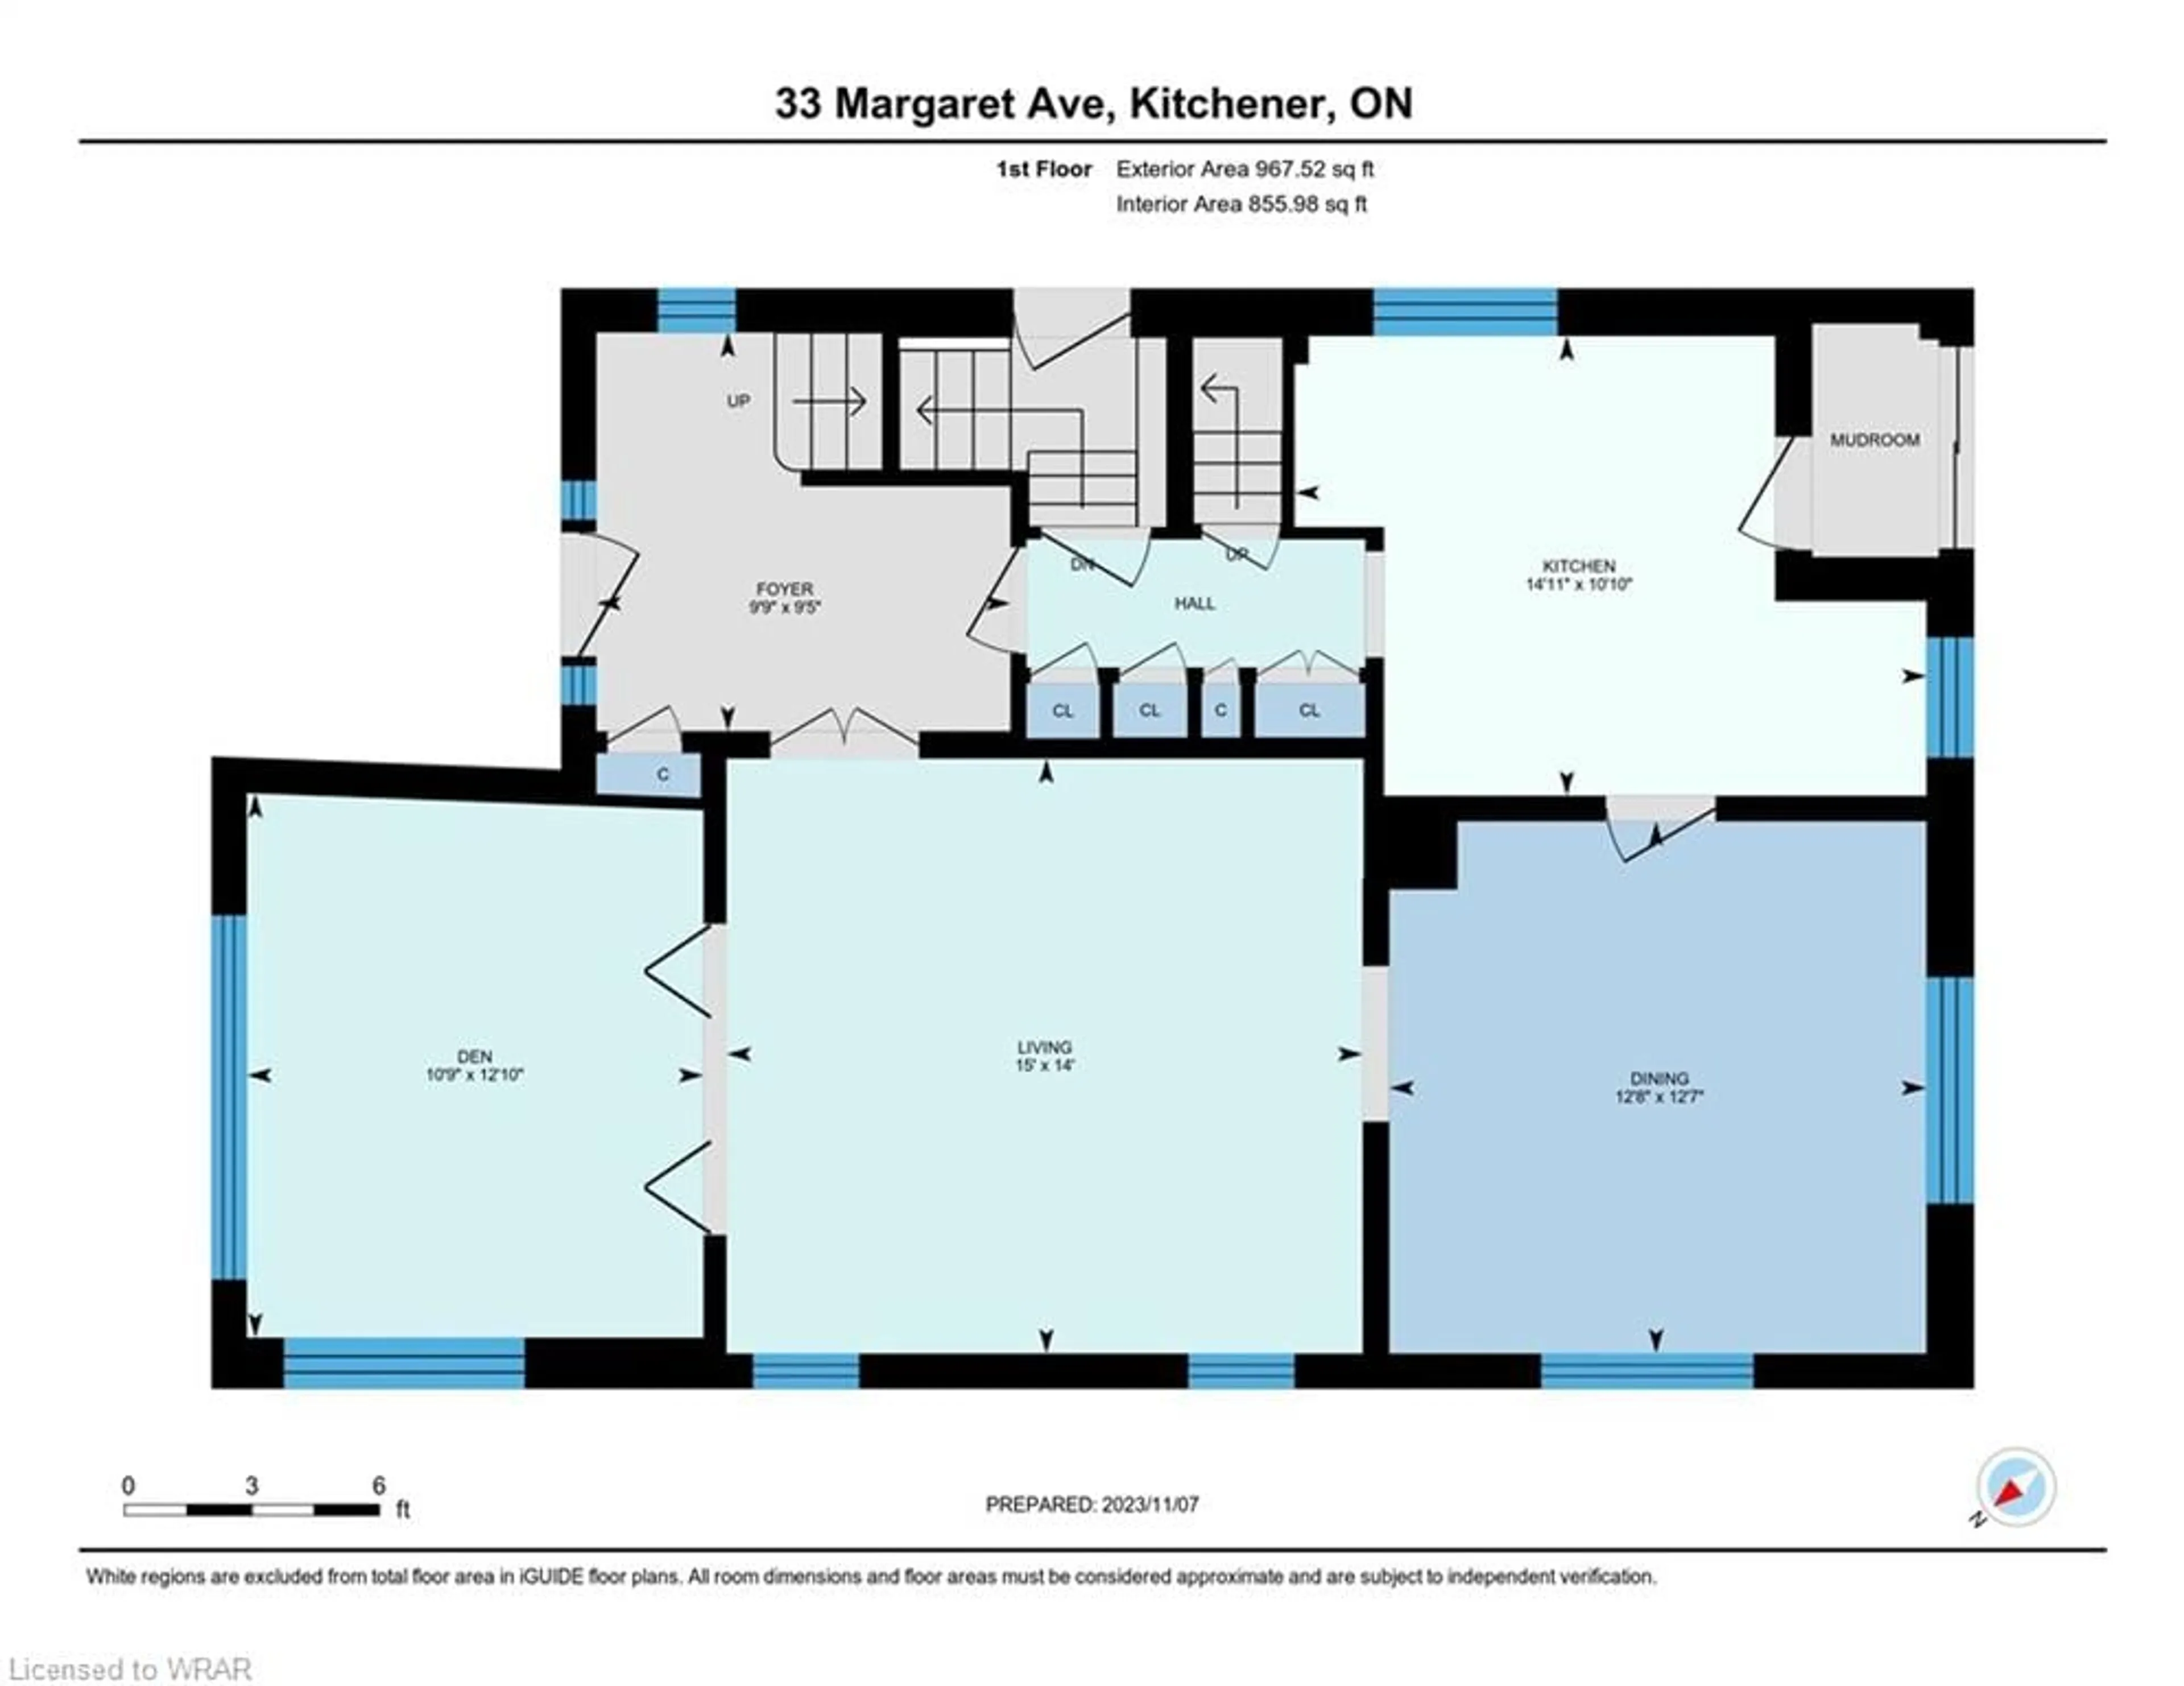 Floor plan for 33 Margaret Ave, Kitchener Ontario N2H 4H1